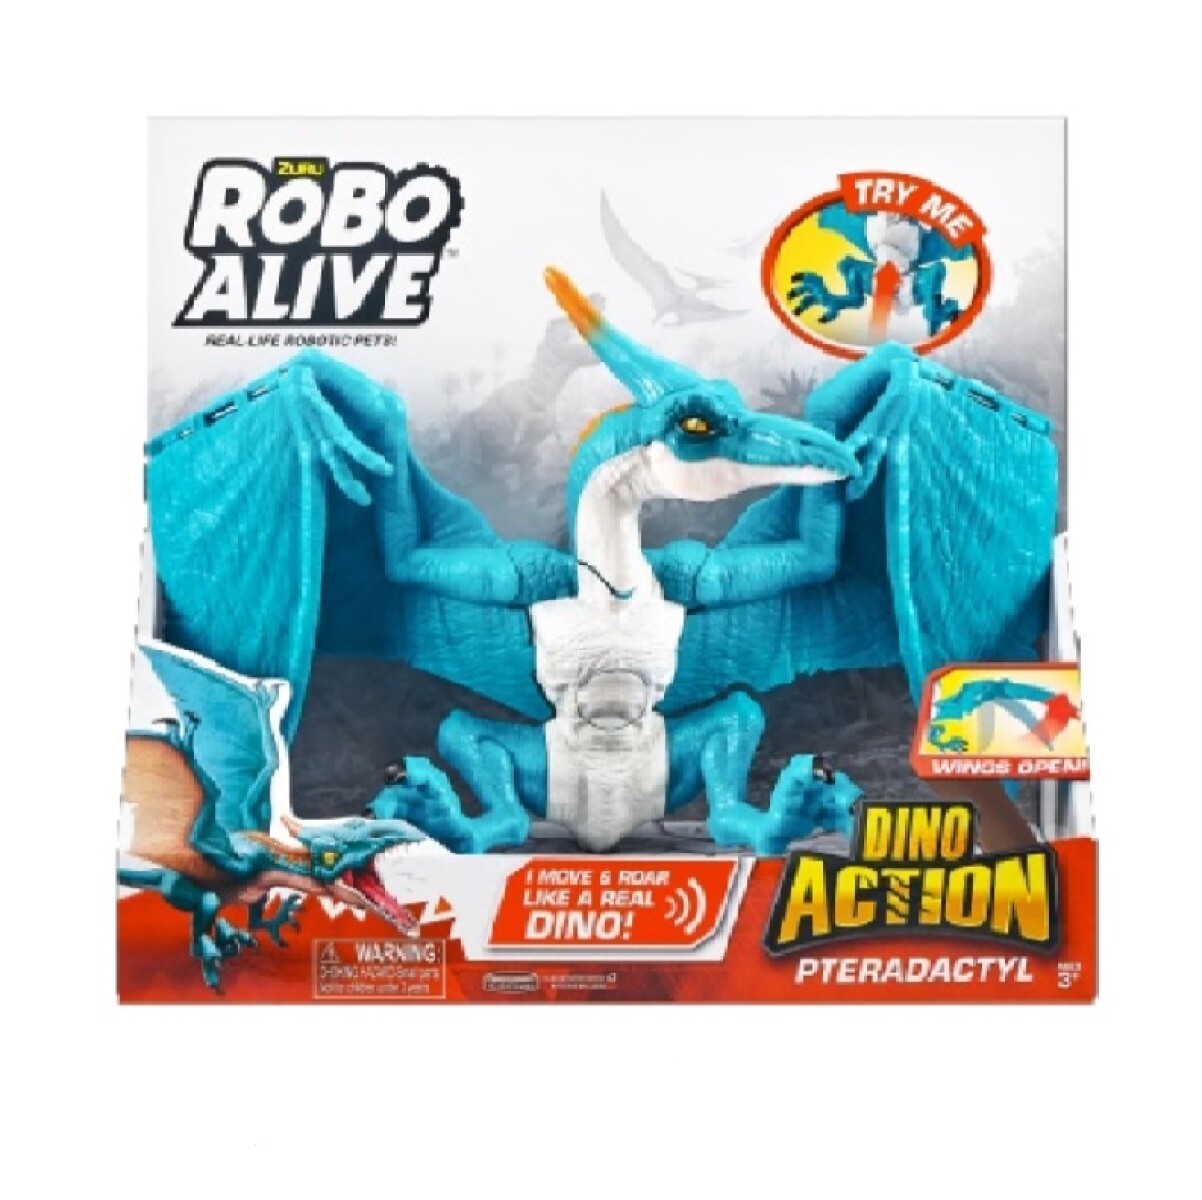 Juguete Robo Alive Action Pterodactyl 7173 - 001 